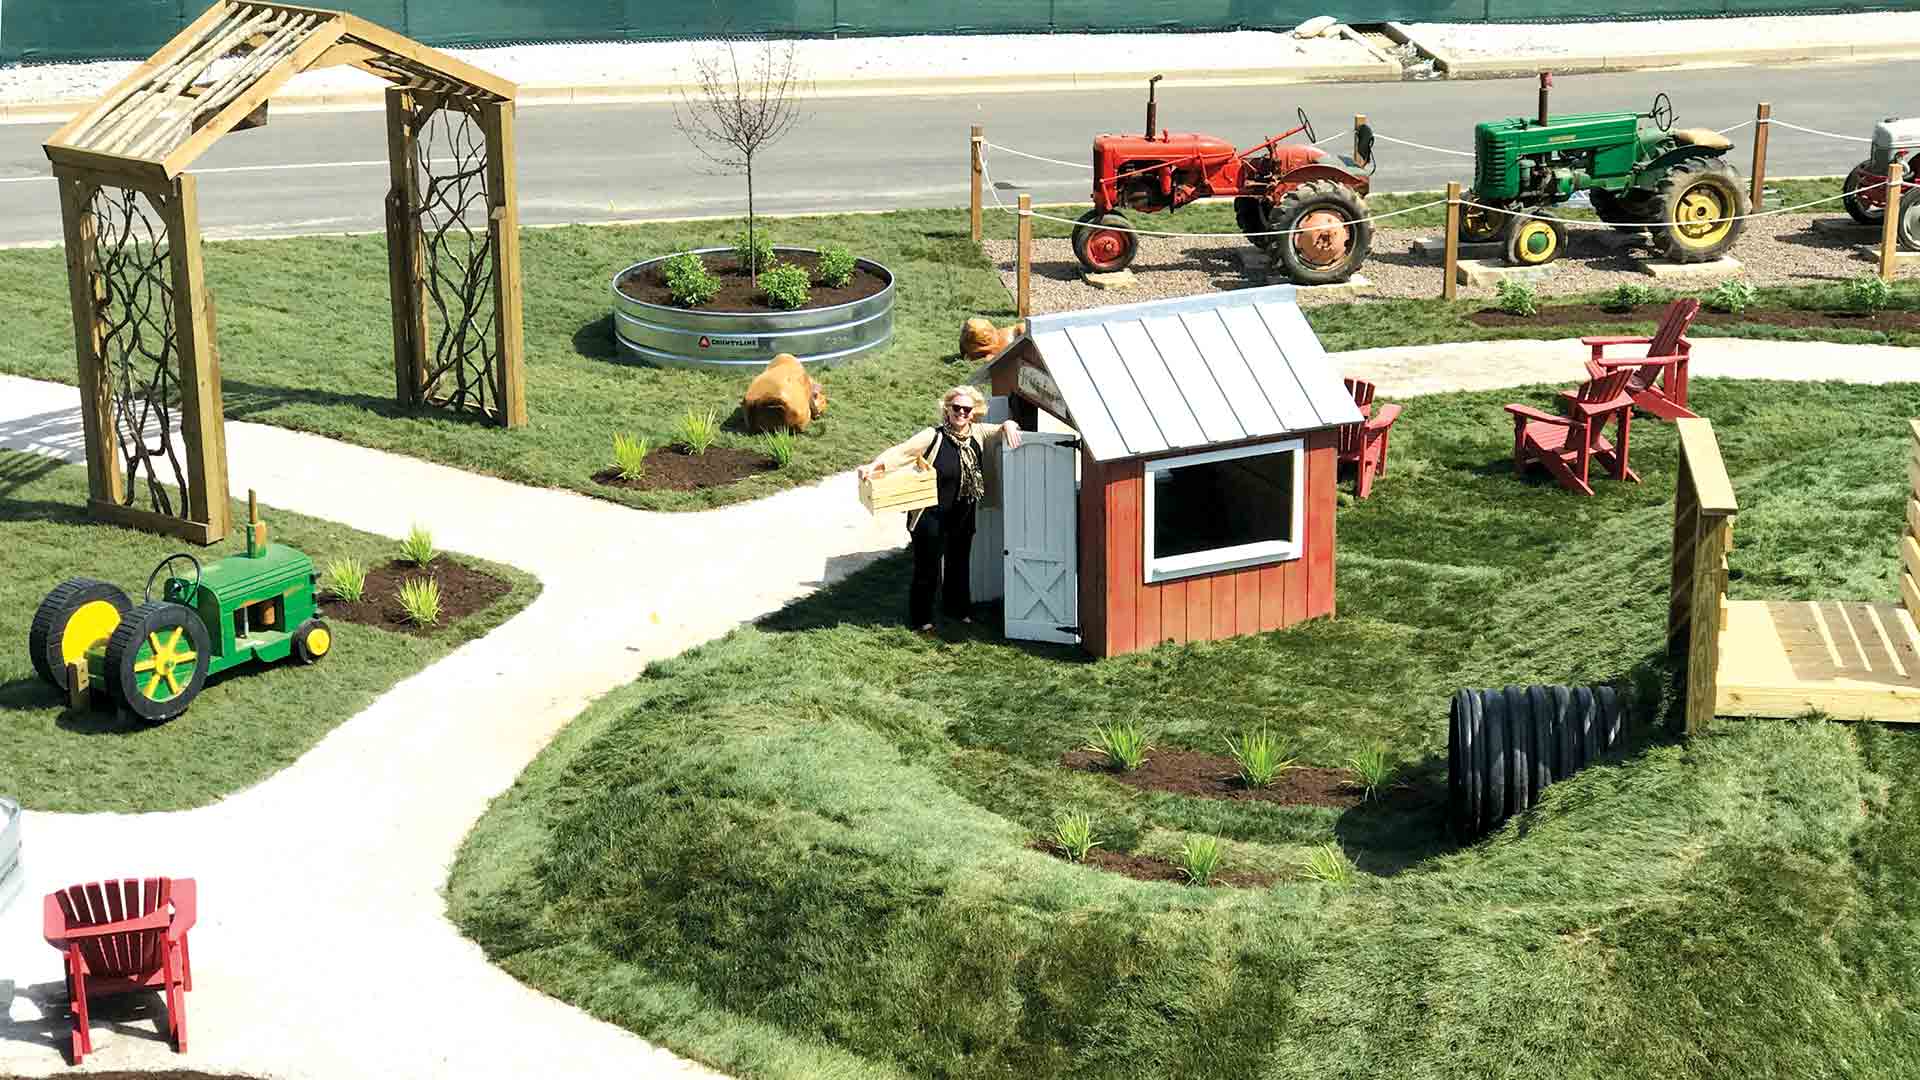 Unique Farm Themed Playground Equipment